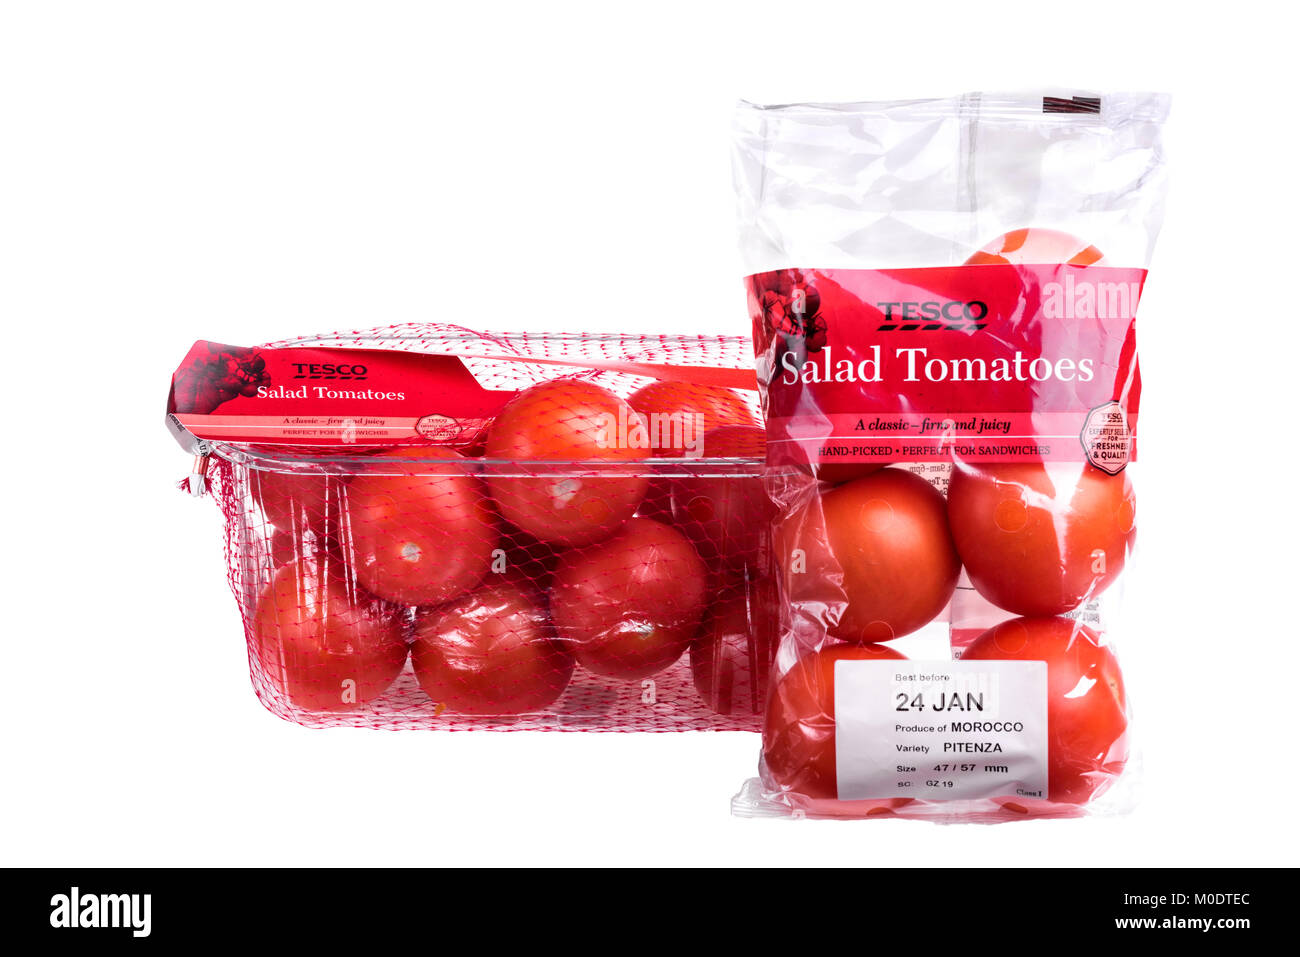 Tesco salad tomatoes, supermarket plastic packaging. Stock Photo